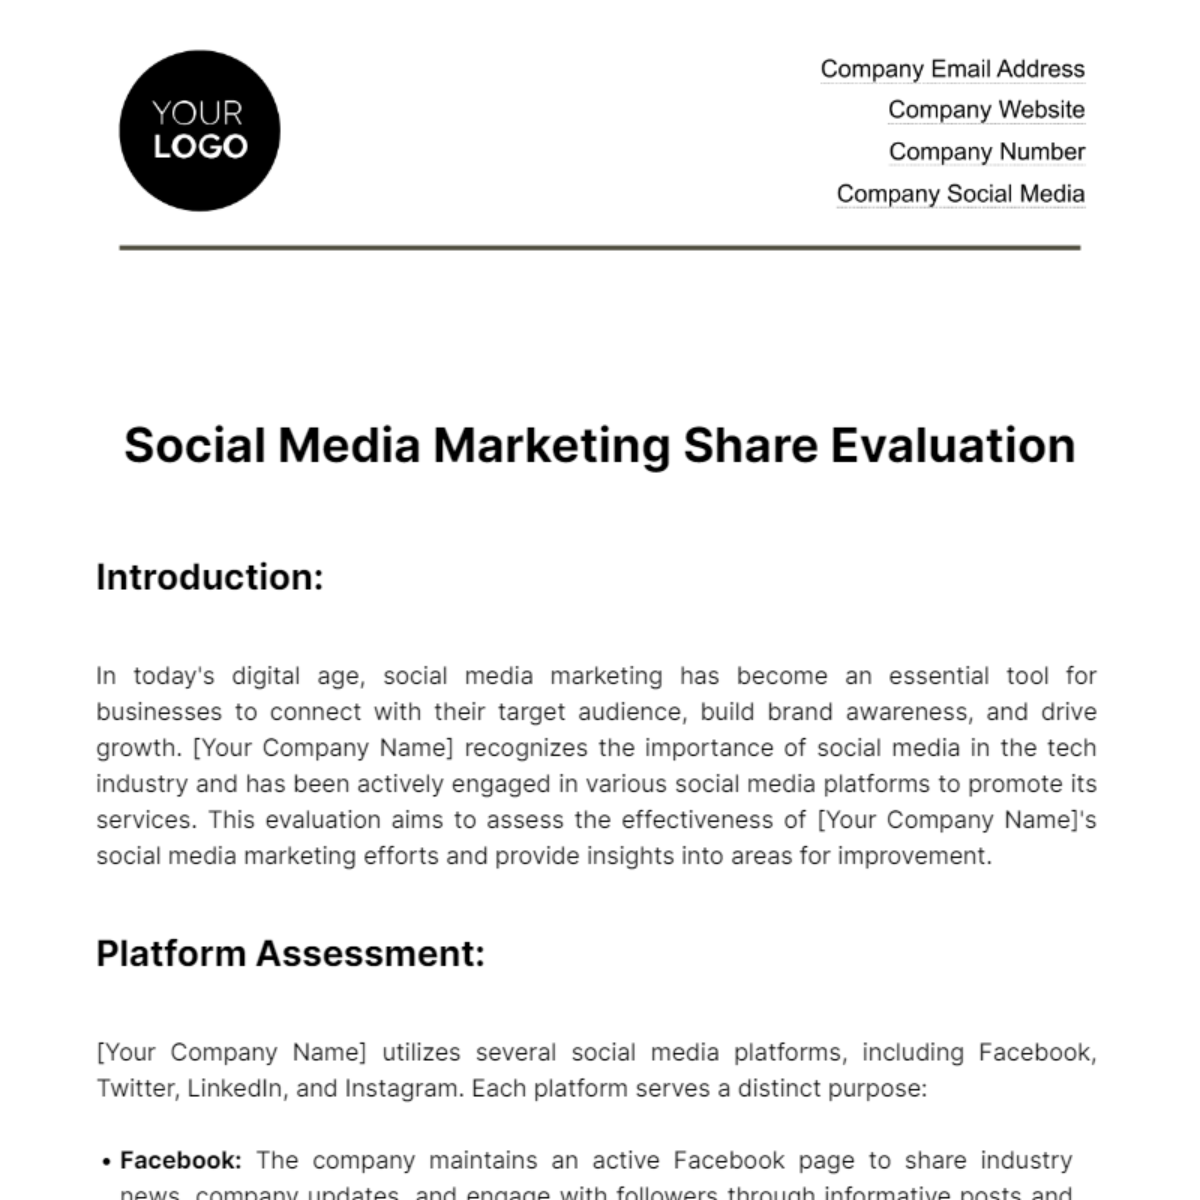 Social Media Marketing Share Evaluation Template